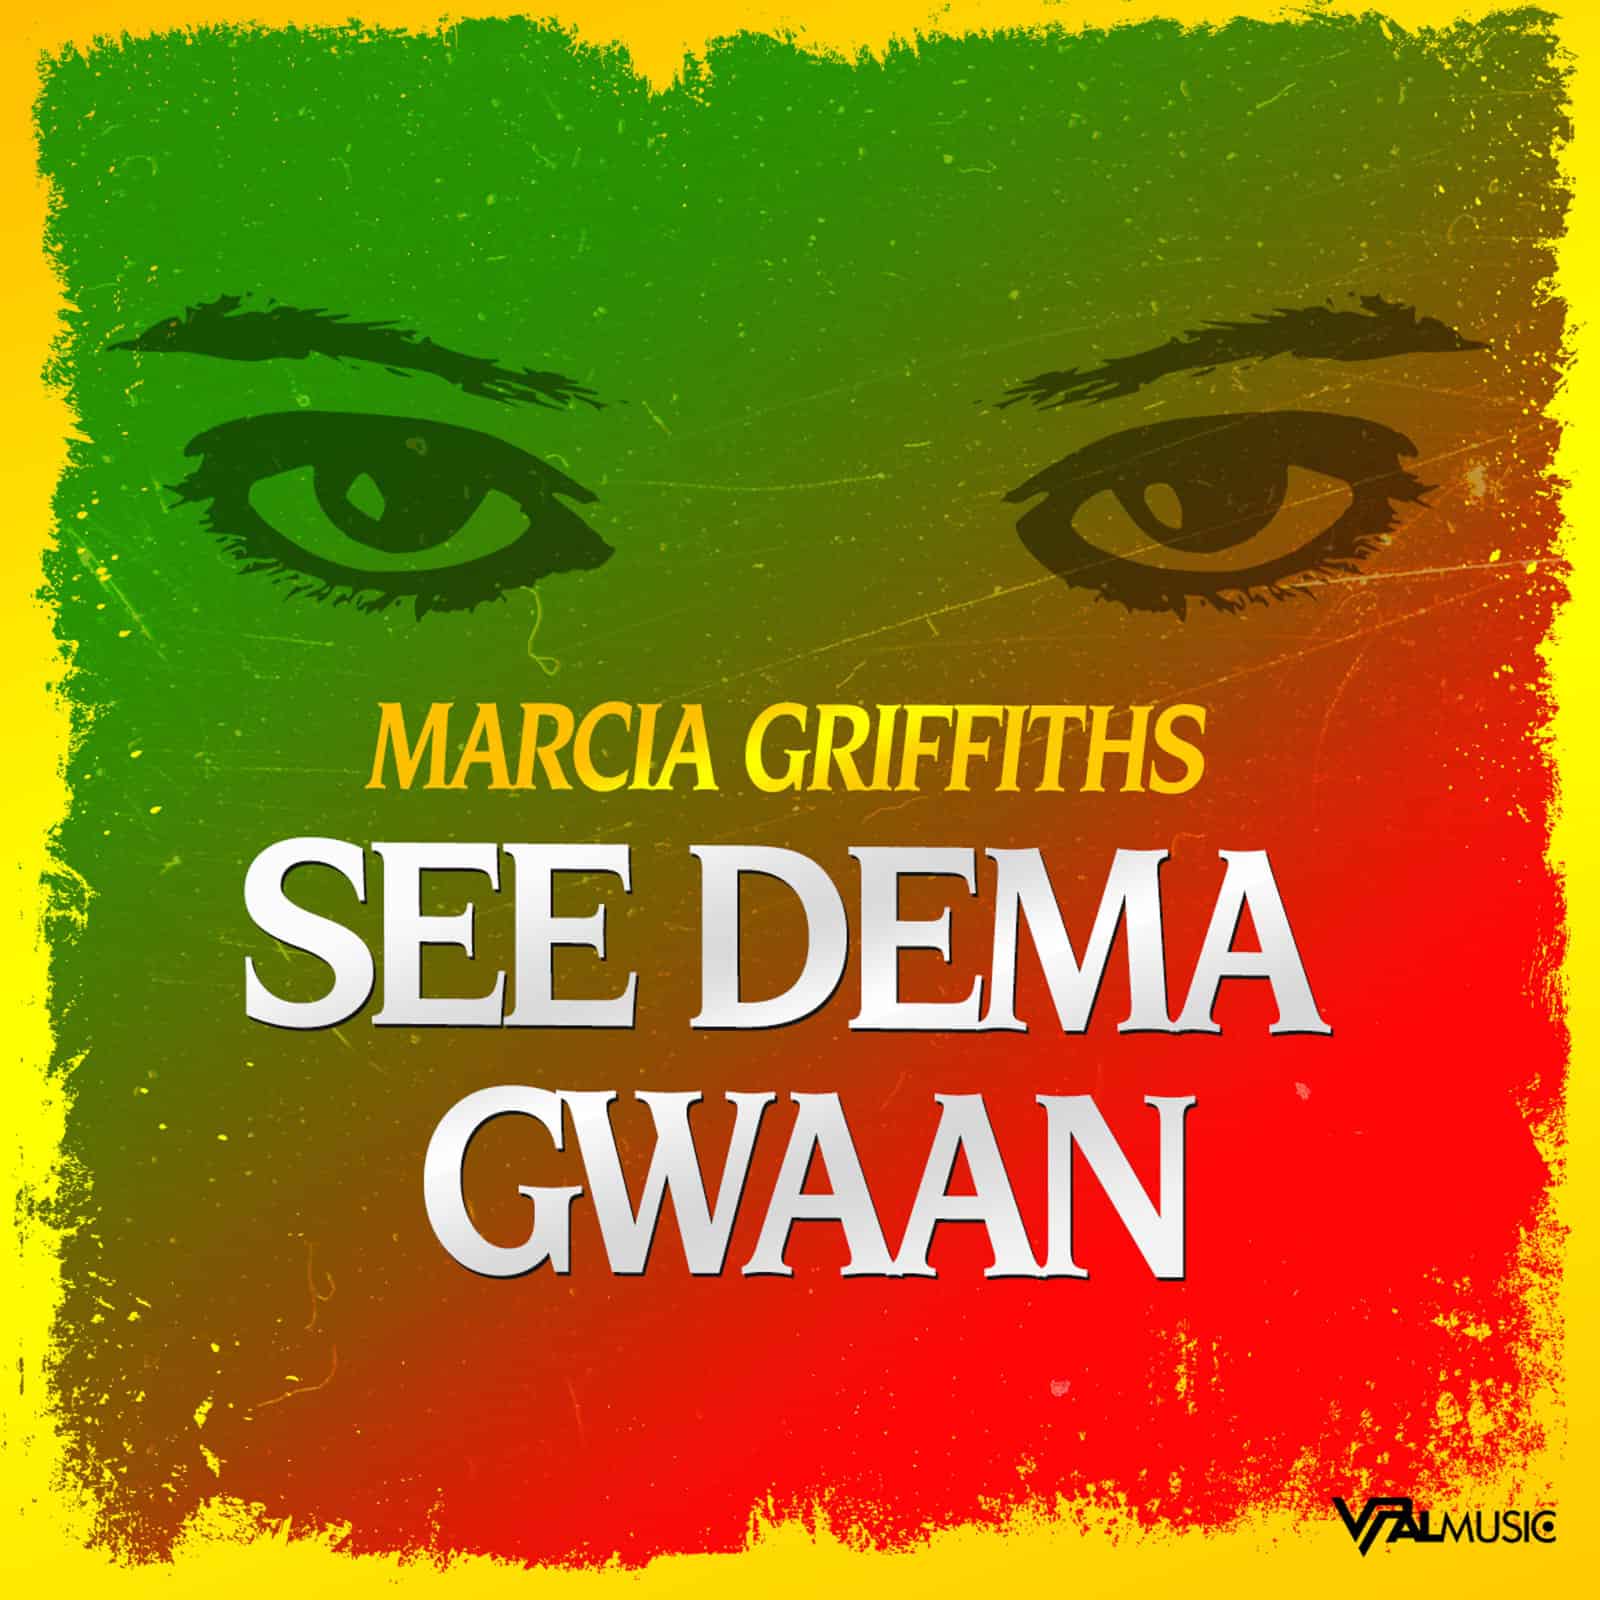 Marcia Griffiths - See Dema Gwaan